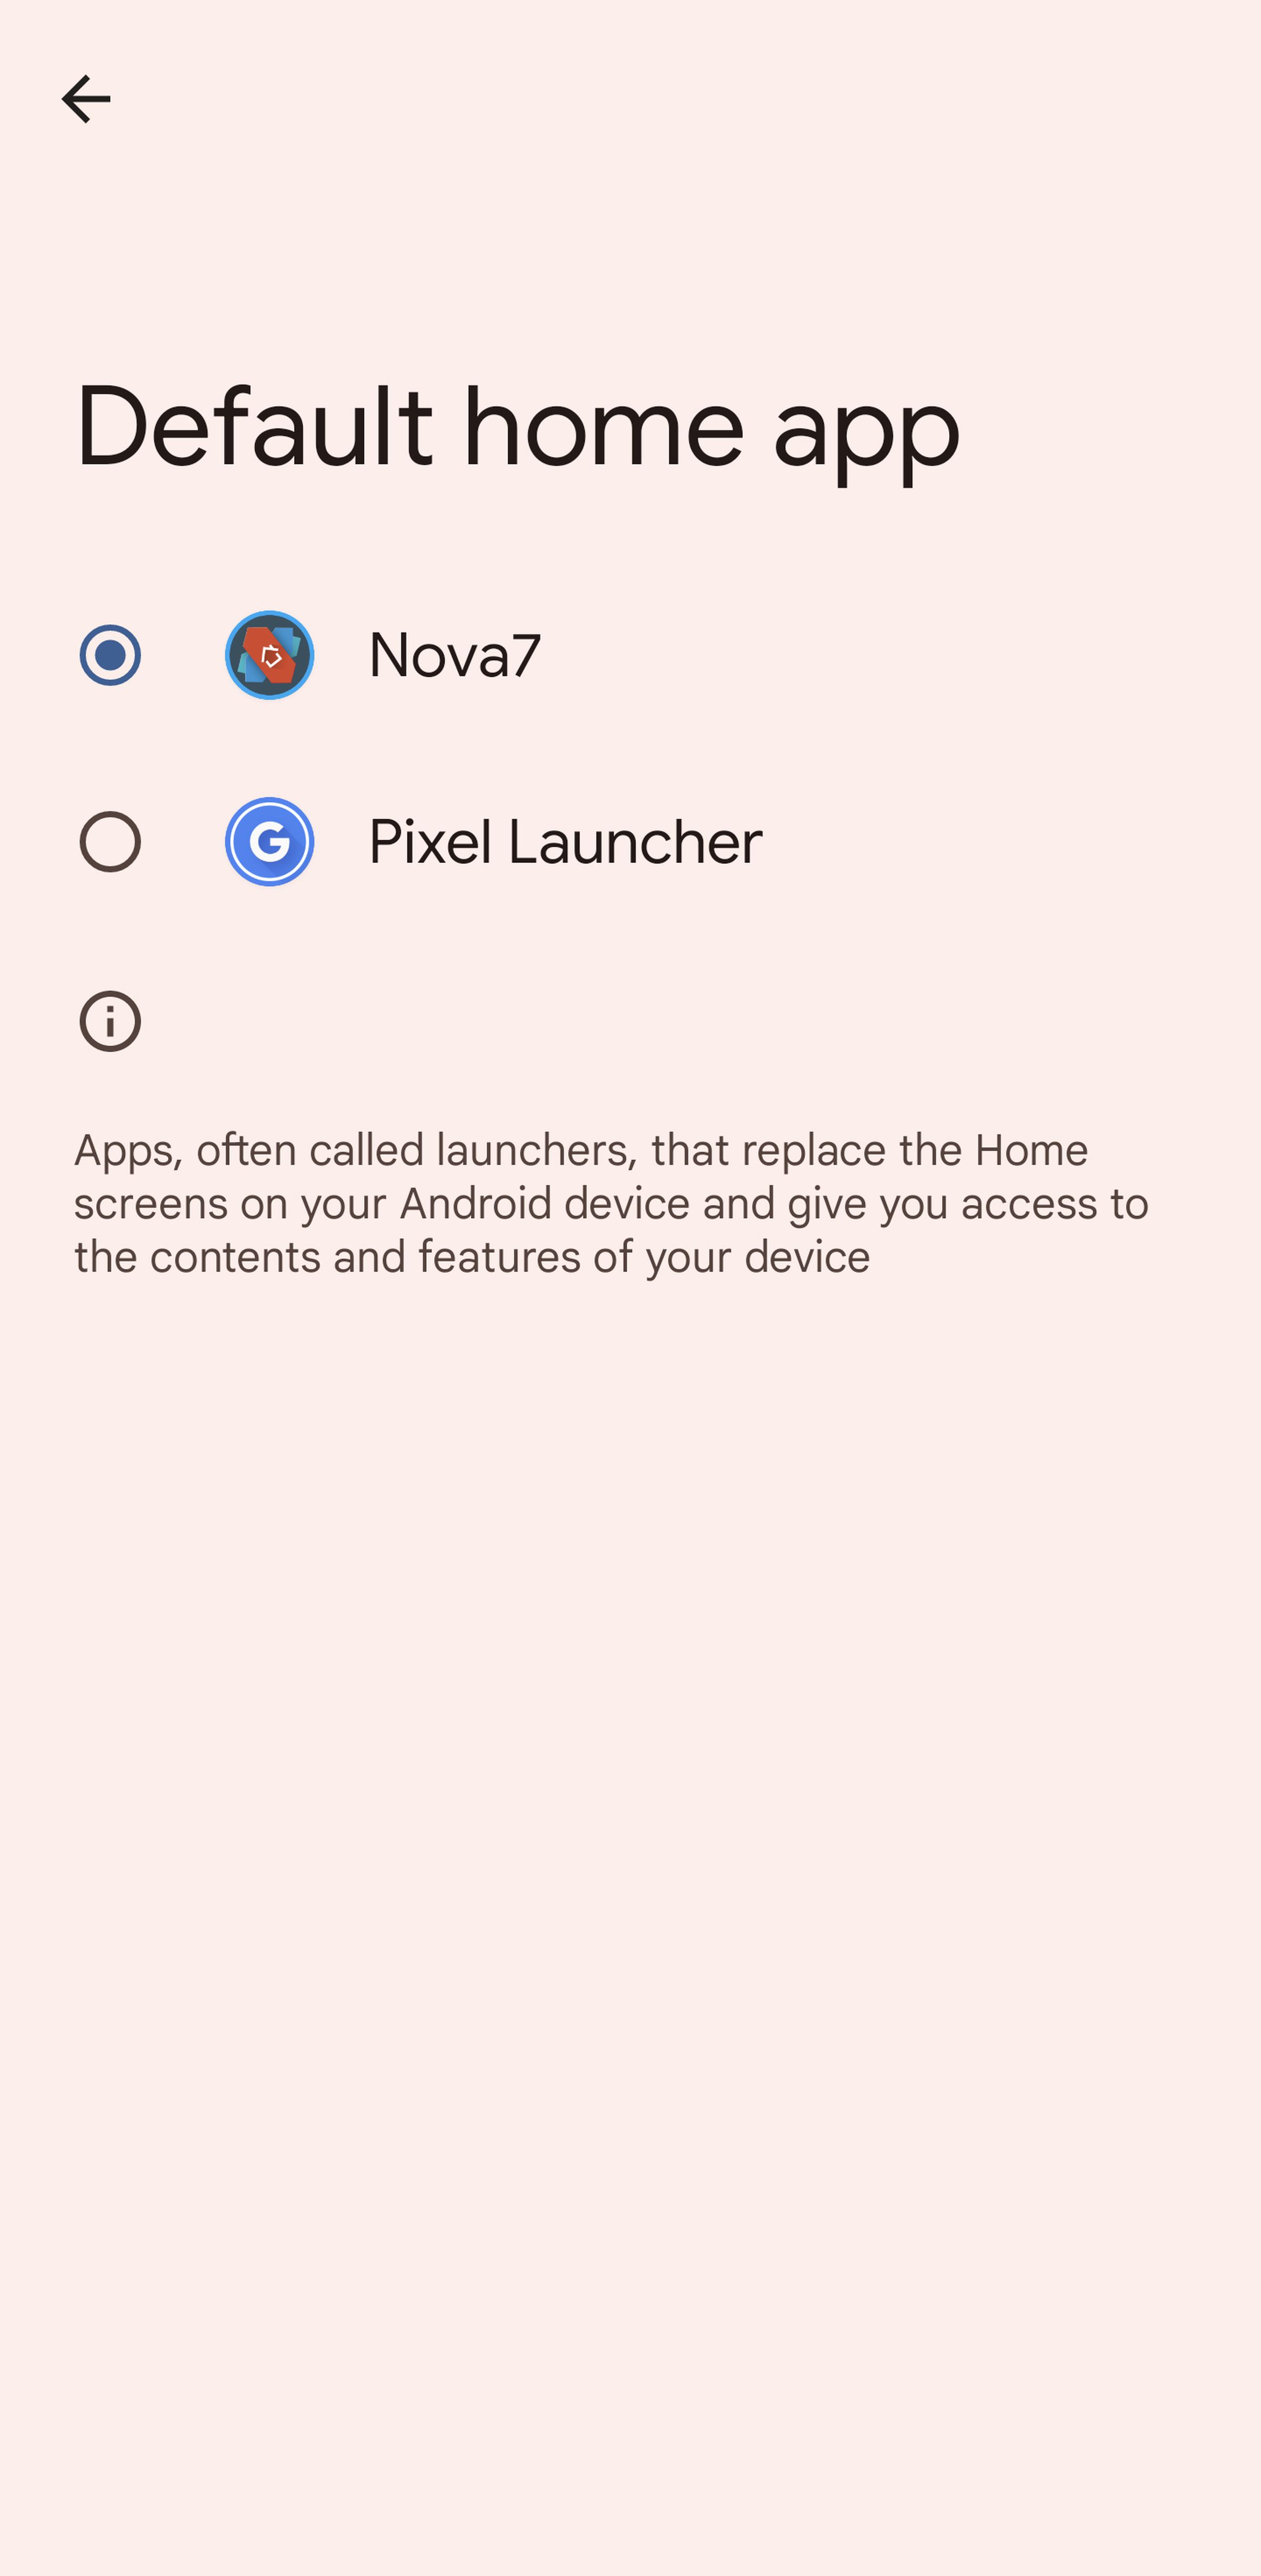 Default home app page listing Nova7 and Pixel launcher.